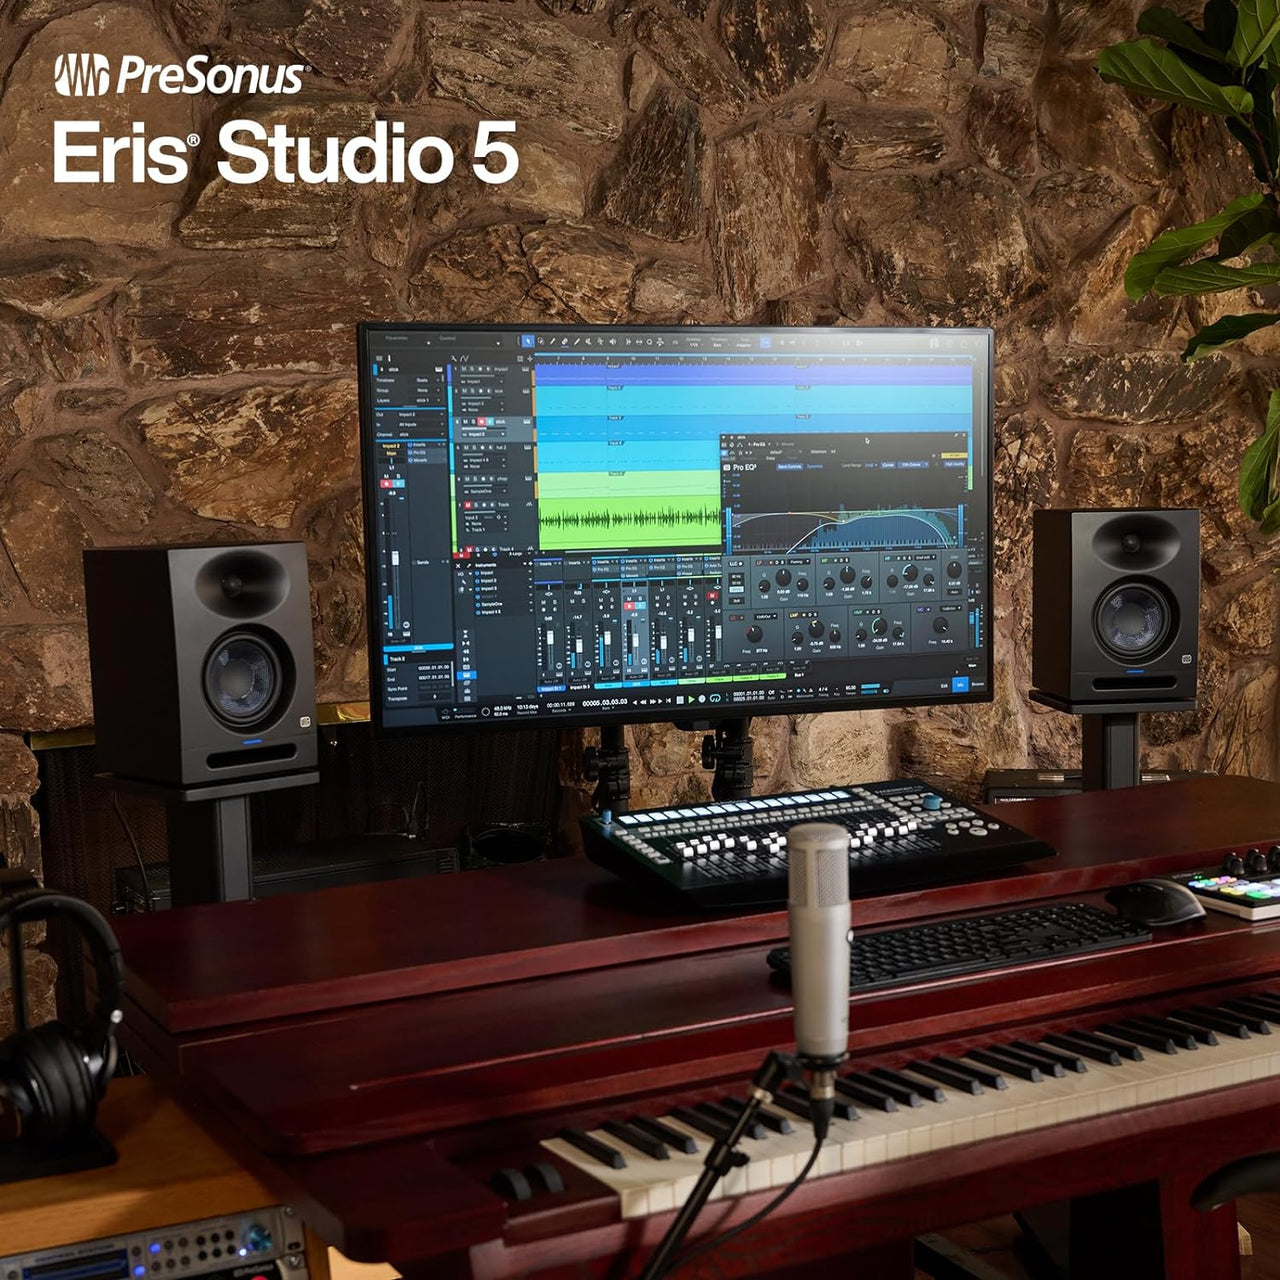 PreSonus Eris Studio 5 5.25-inch 2-Way Active Studio Monitors with EBM Waveguide